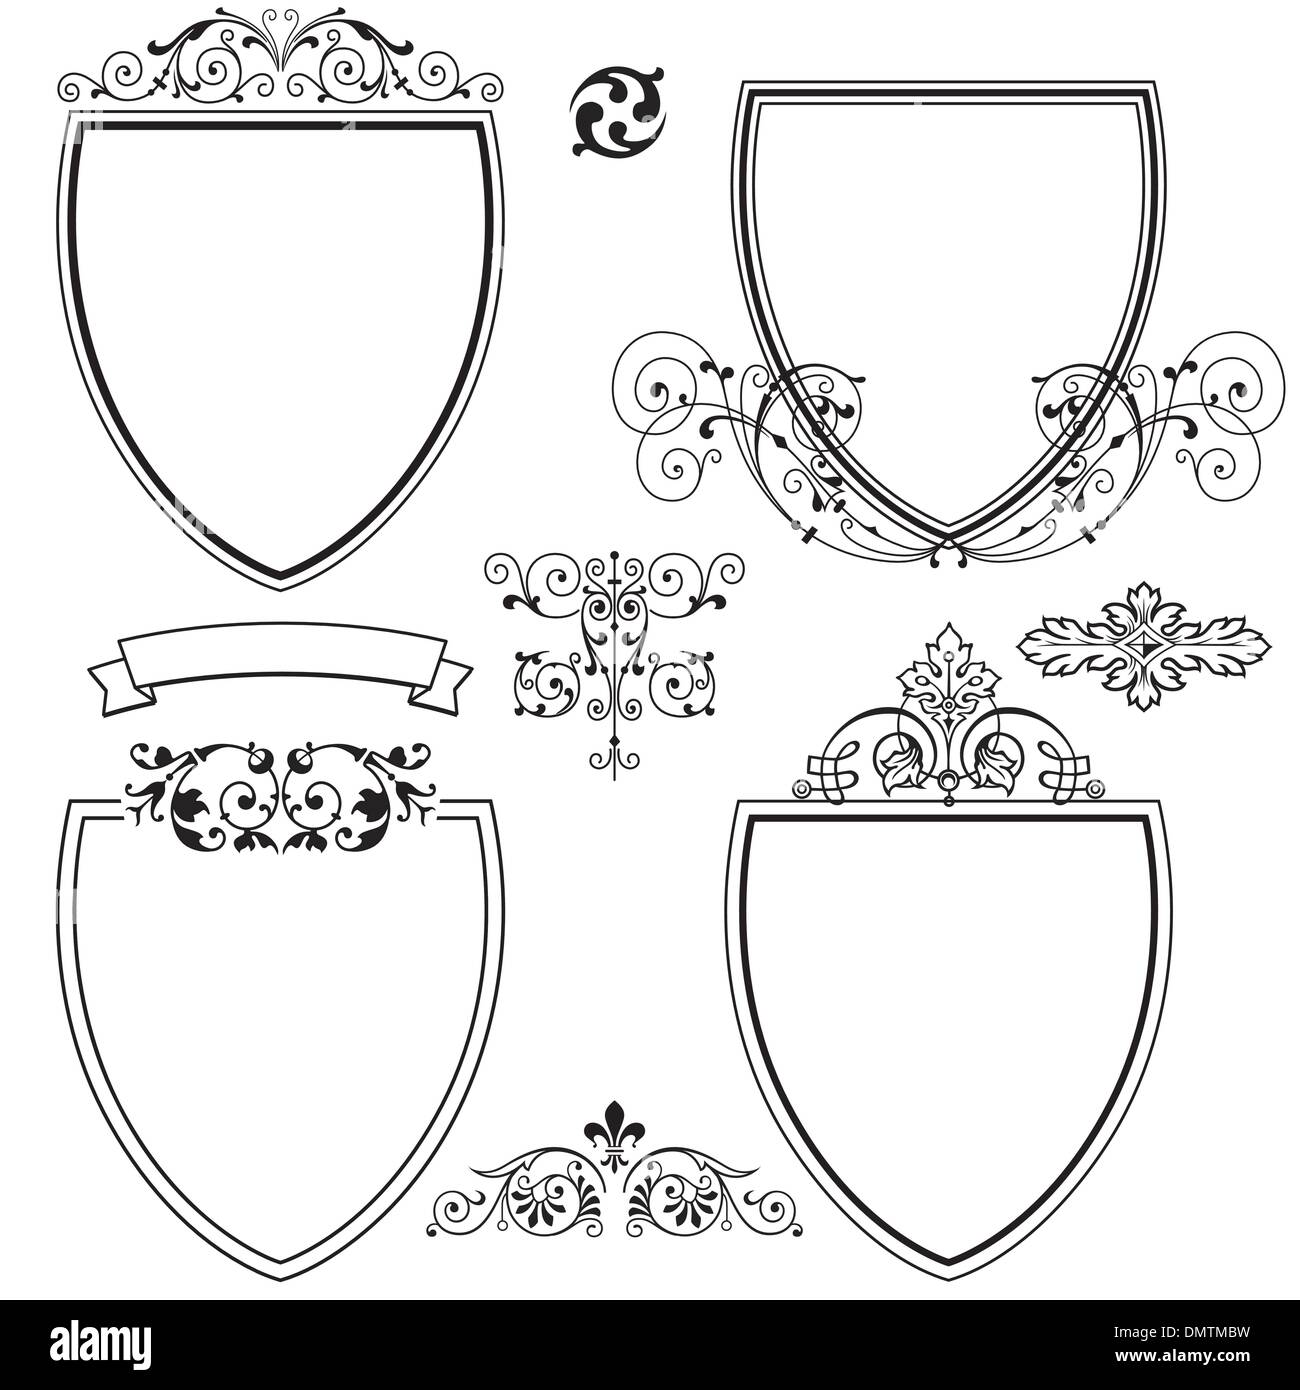 Heraldic shields Black and White Stock Photos & Images - Alamy